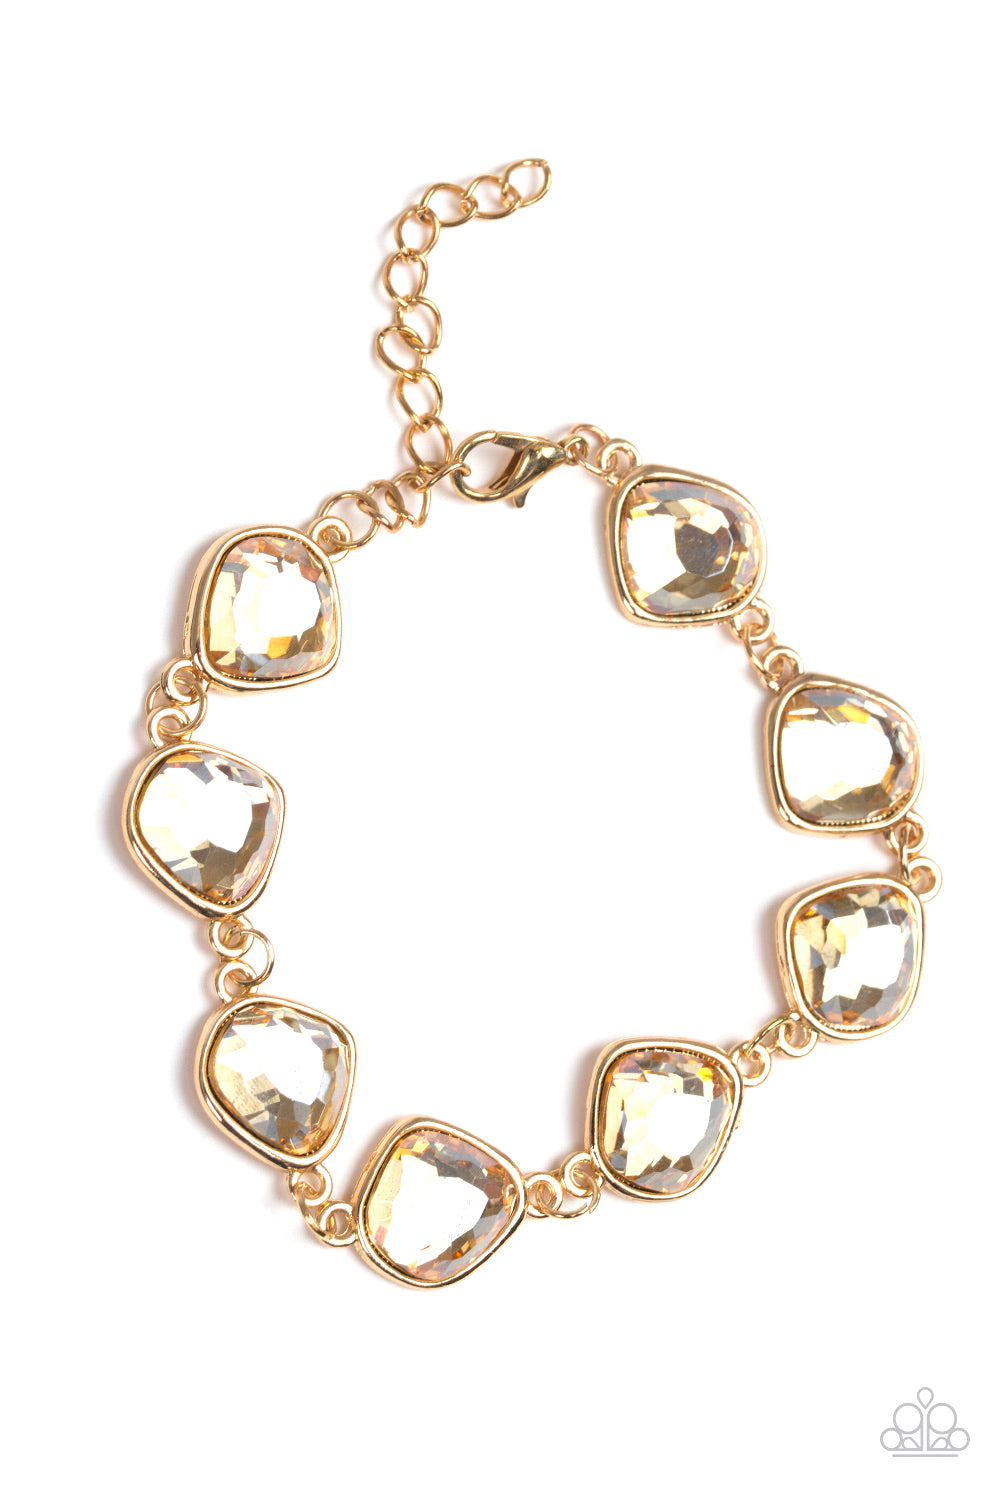 Perfect Imperfection - Gold Bracelet freeshipping - JewLz4u Gemstone Gallery